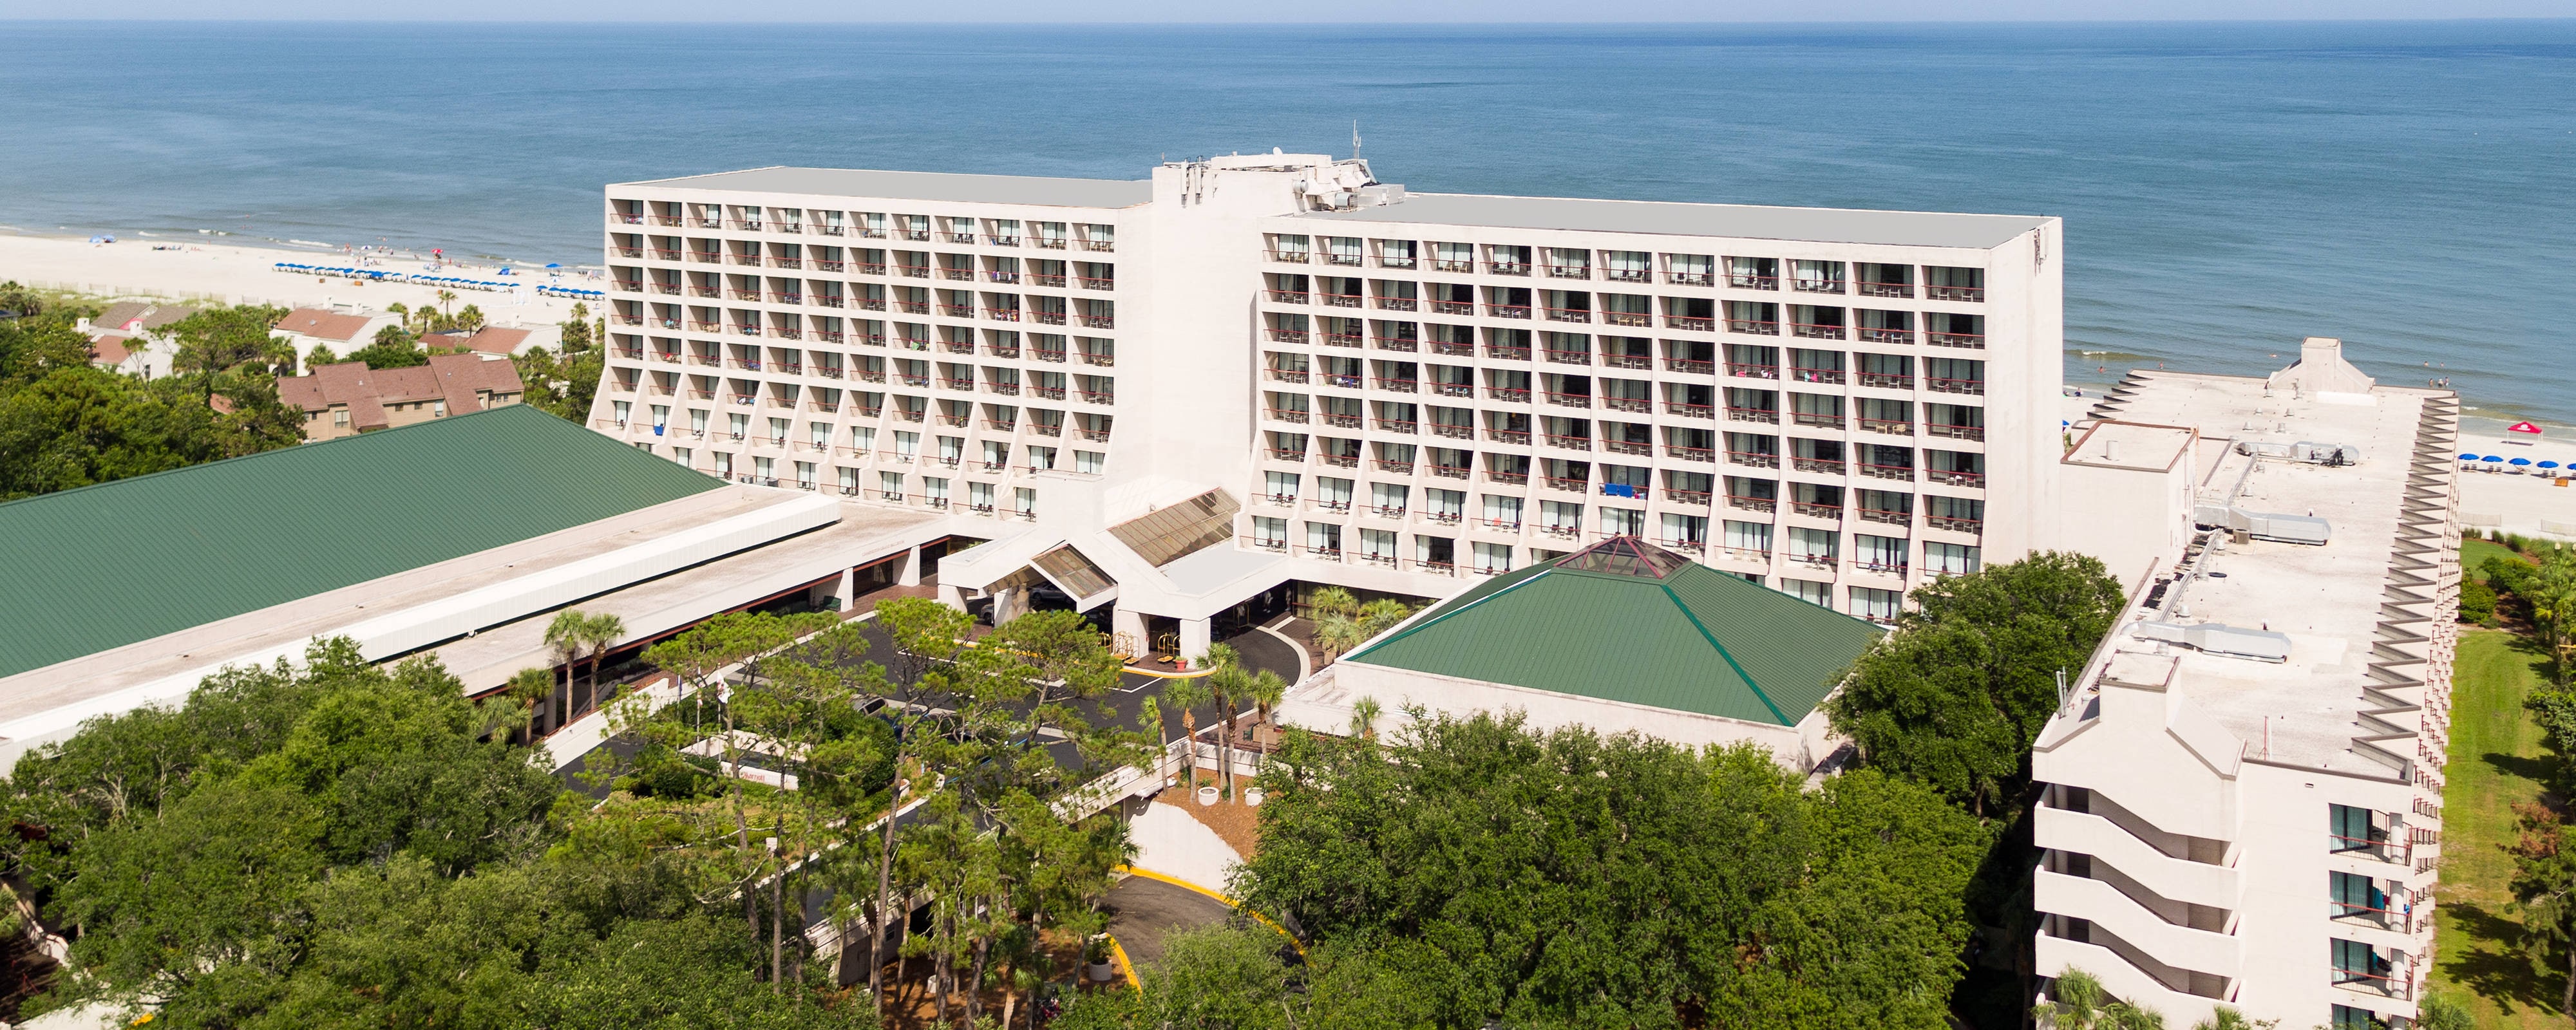 Hilton Head Hotel | Hilton Head Marriott Resort & Spa